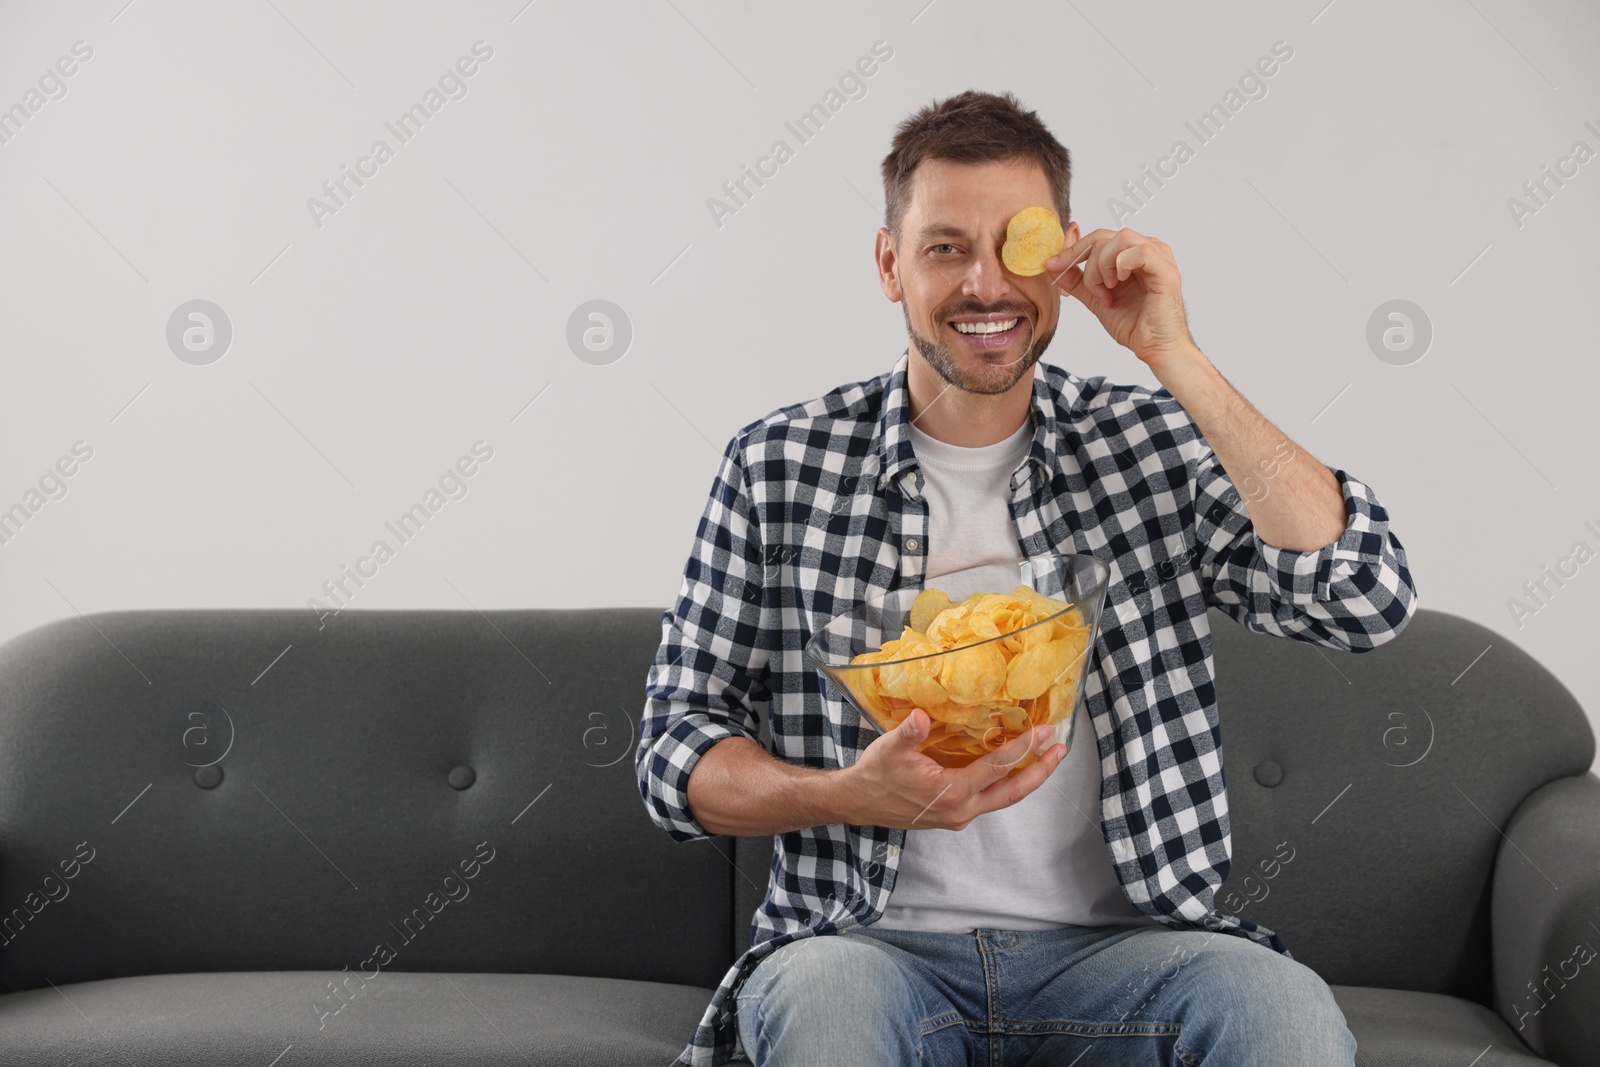 Photo of Handsome man holding potato chips near eye on sofa